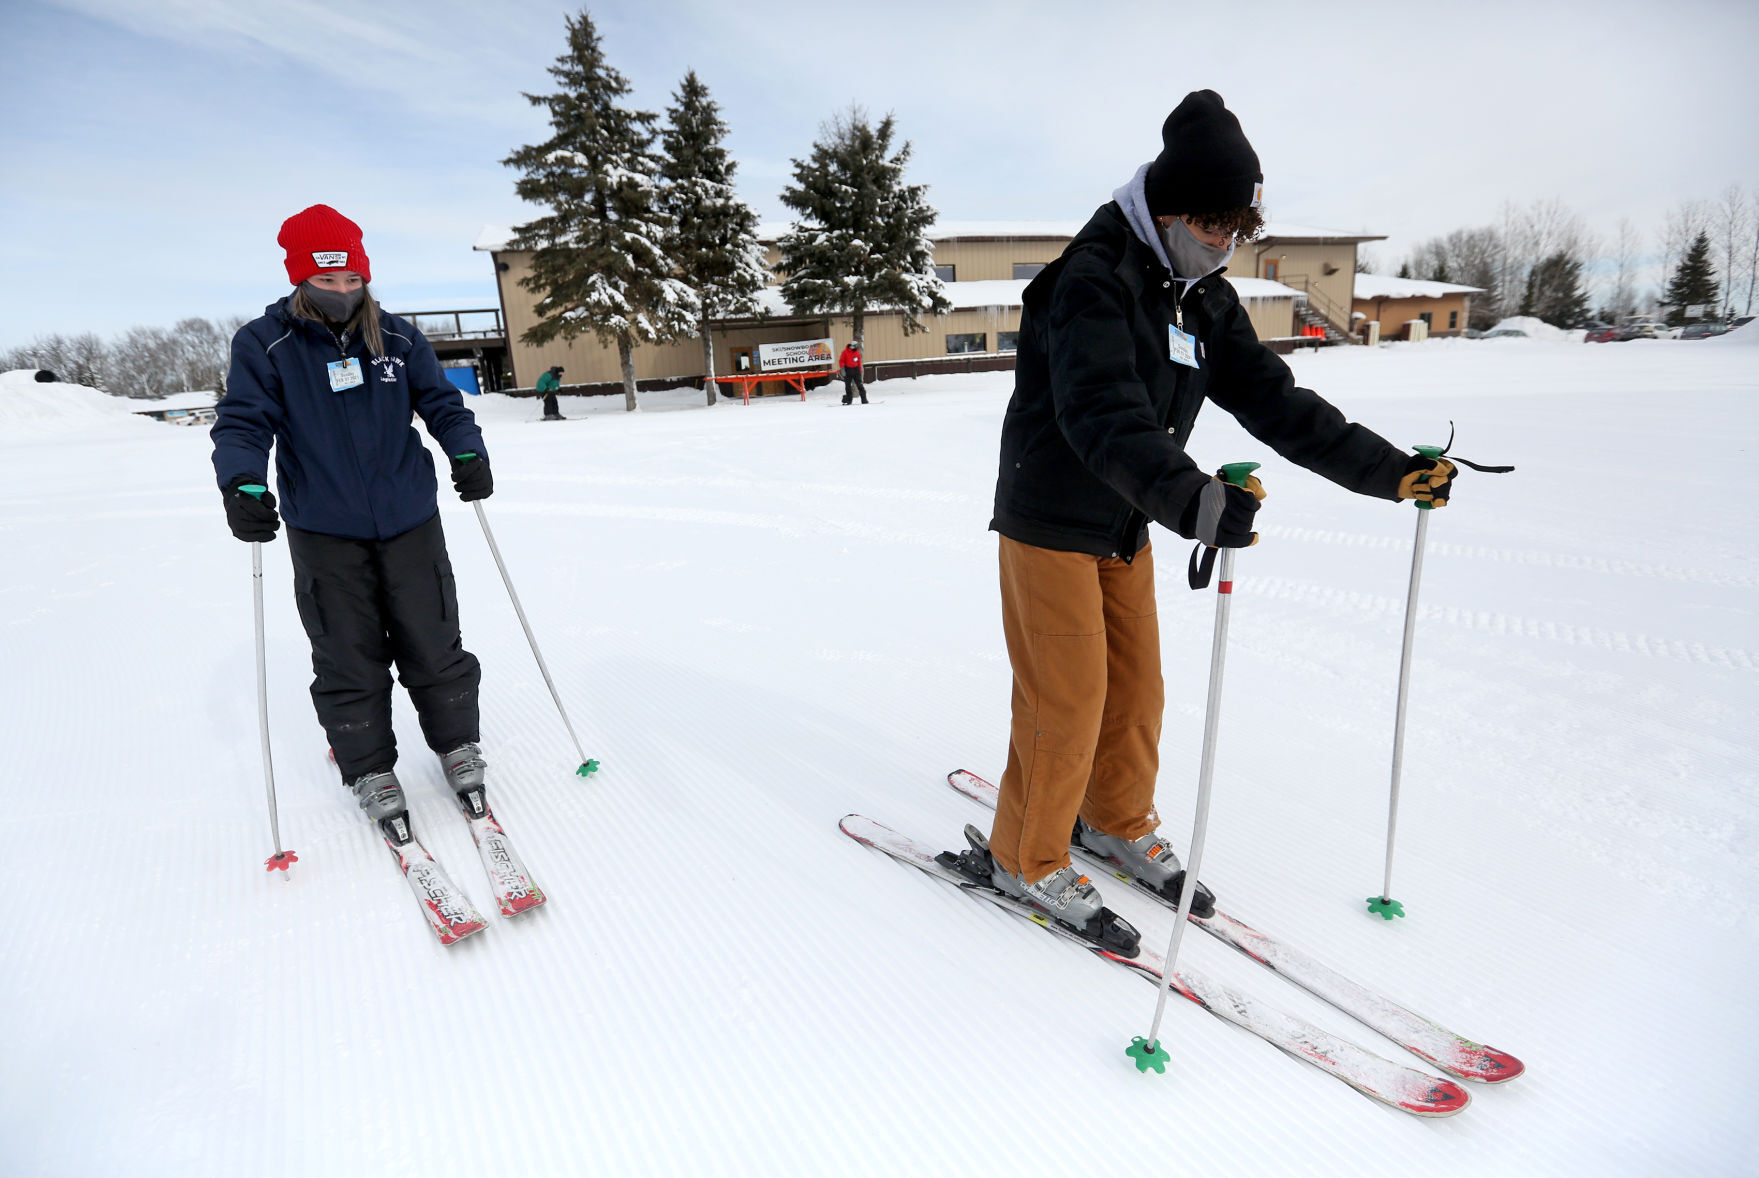 Sedina Covic (left), 18, and Madison McCarvel, 19, both of Waterloo, Iowa, ski at Sundown on Sunday. PHOTO CREDIT: JESSICA REILLY